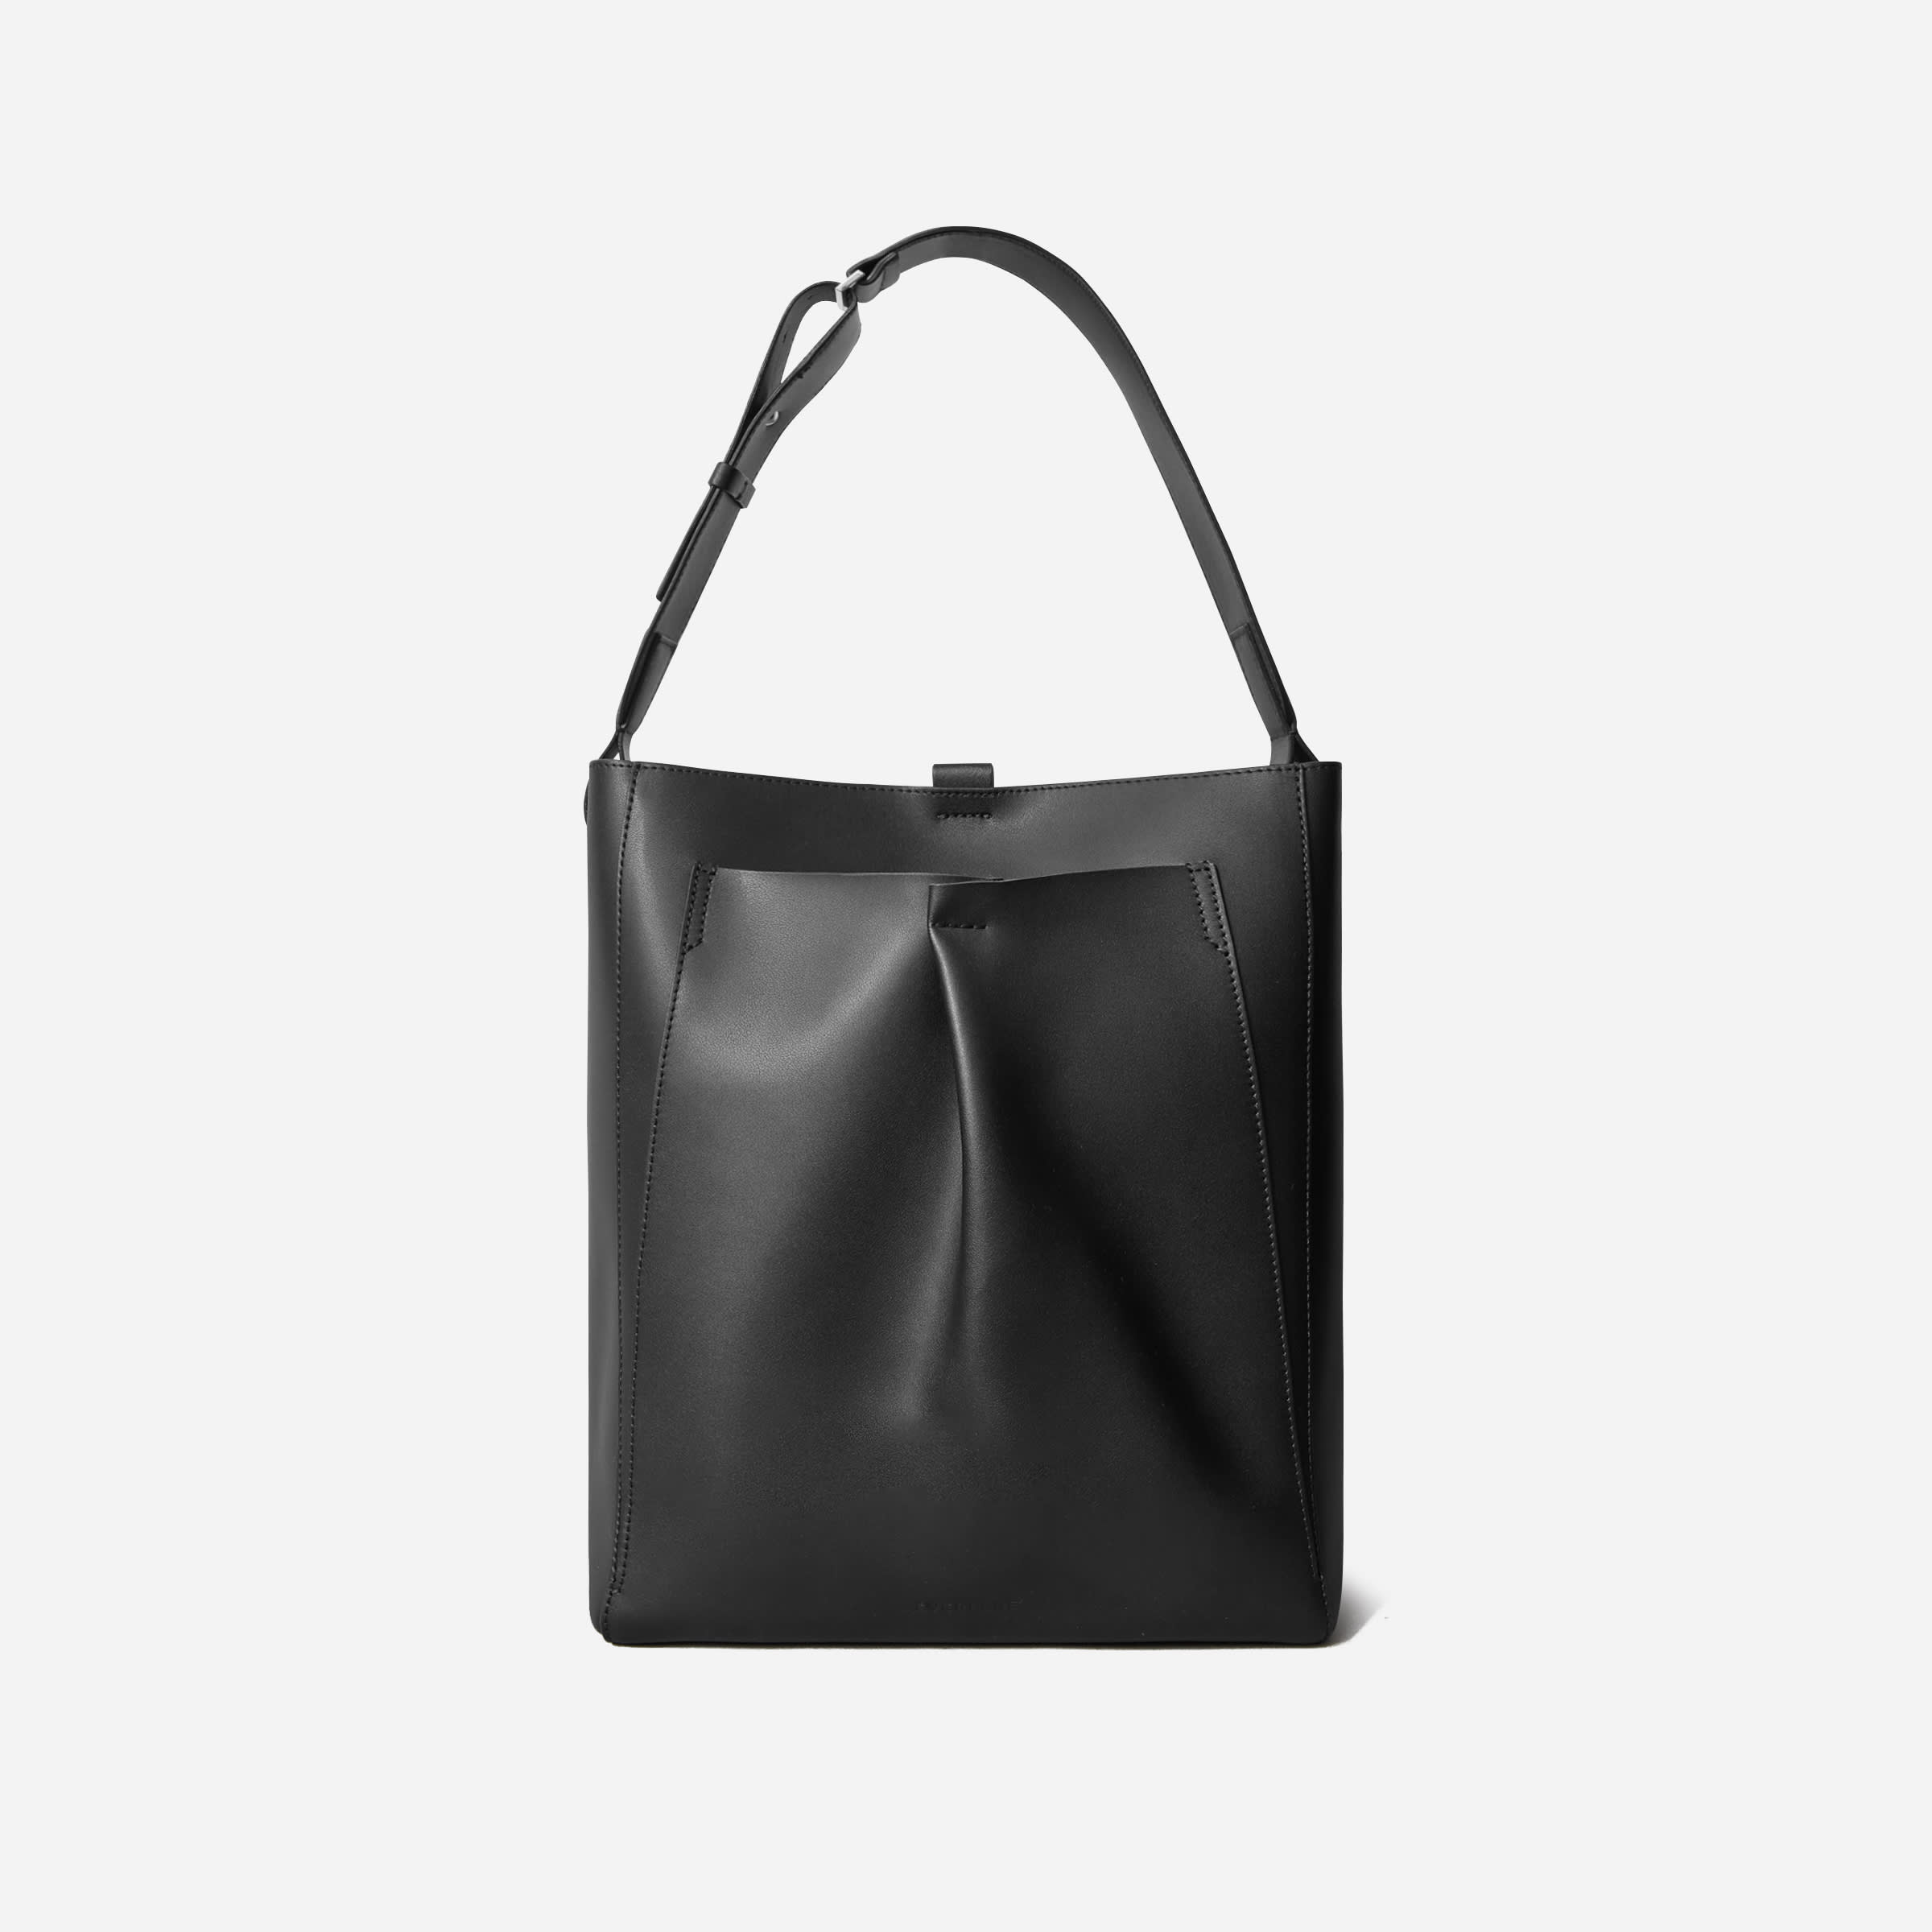 Everlane The Italian Leather Studio Bag